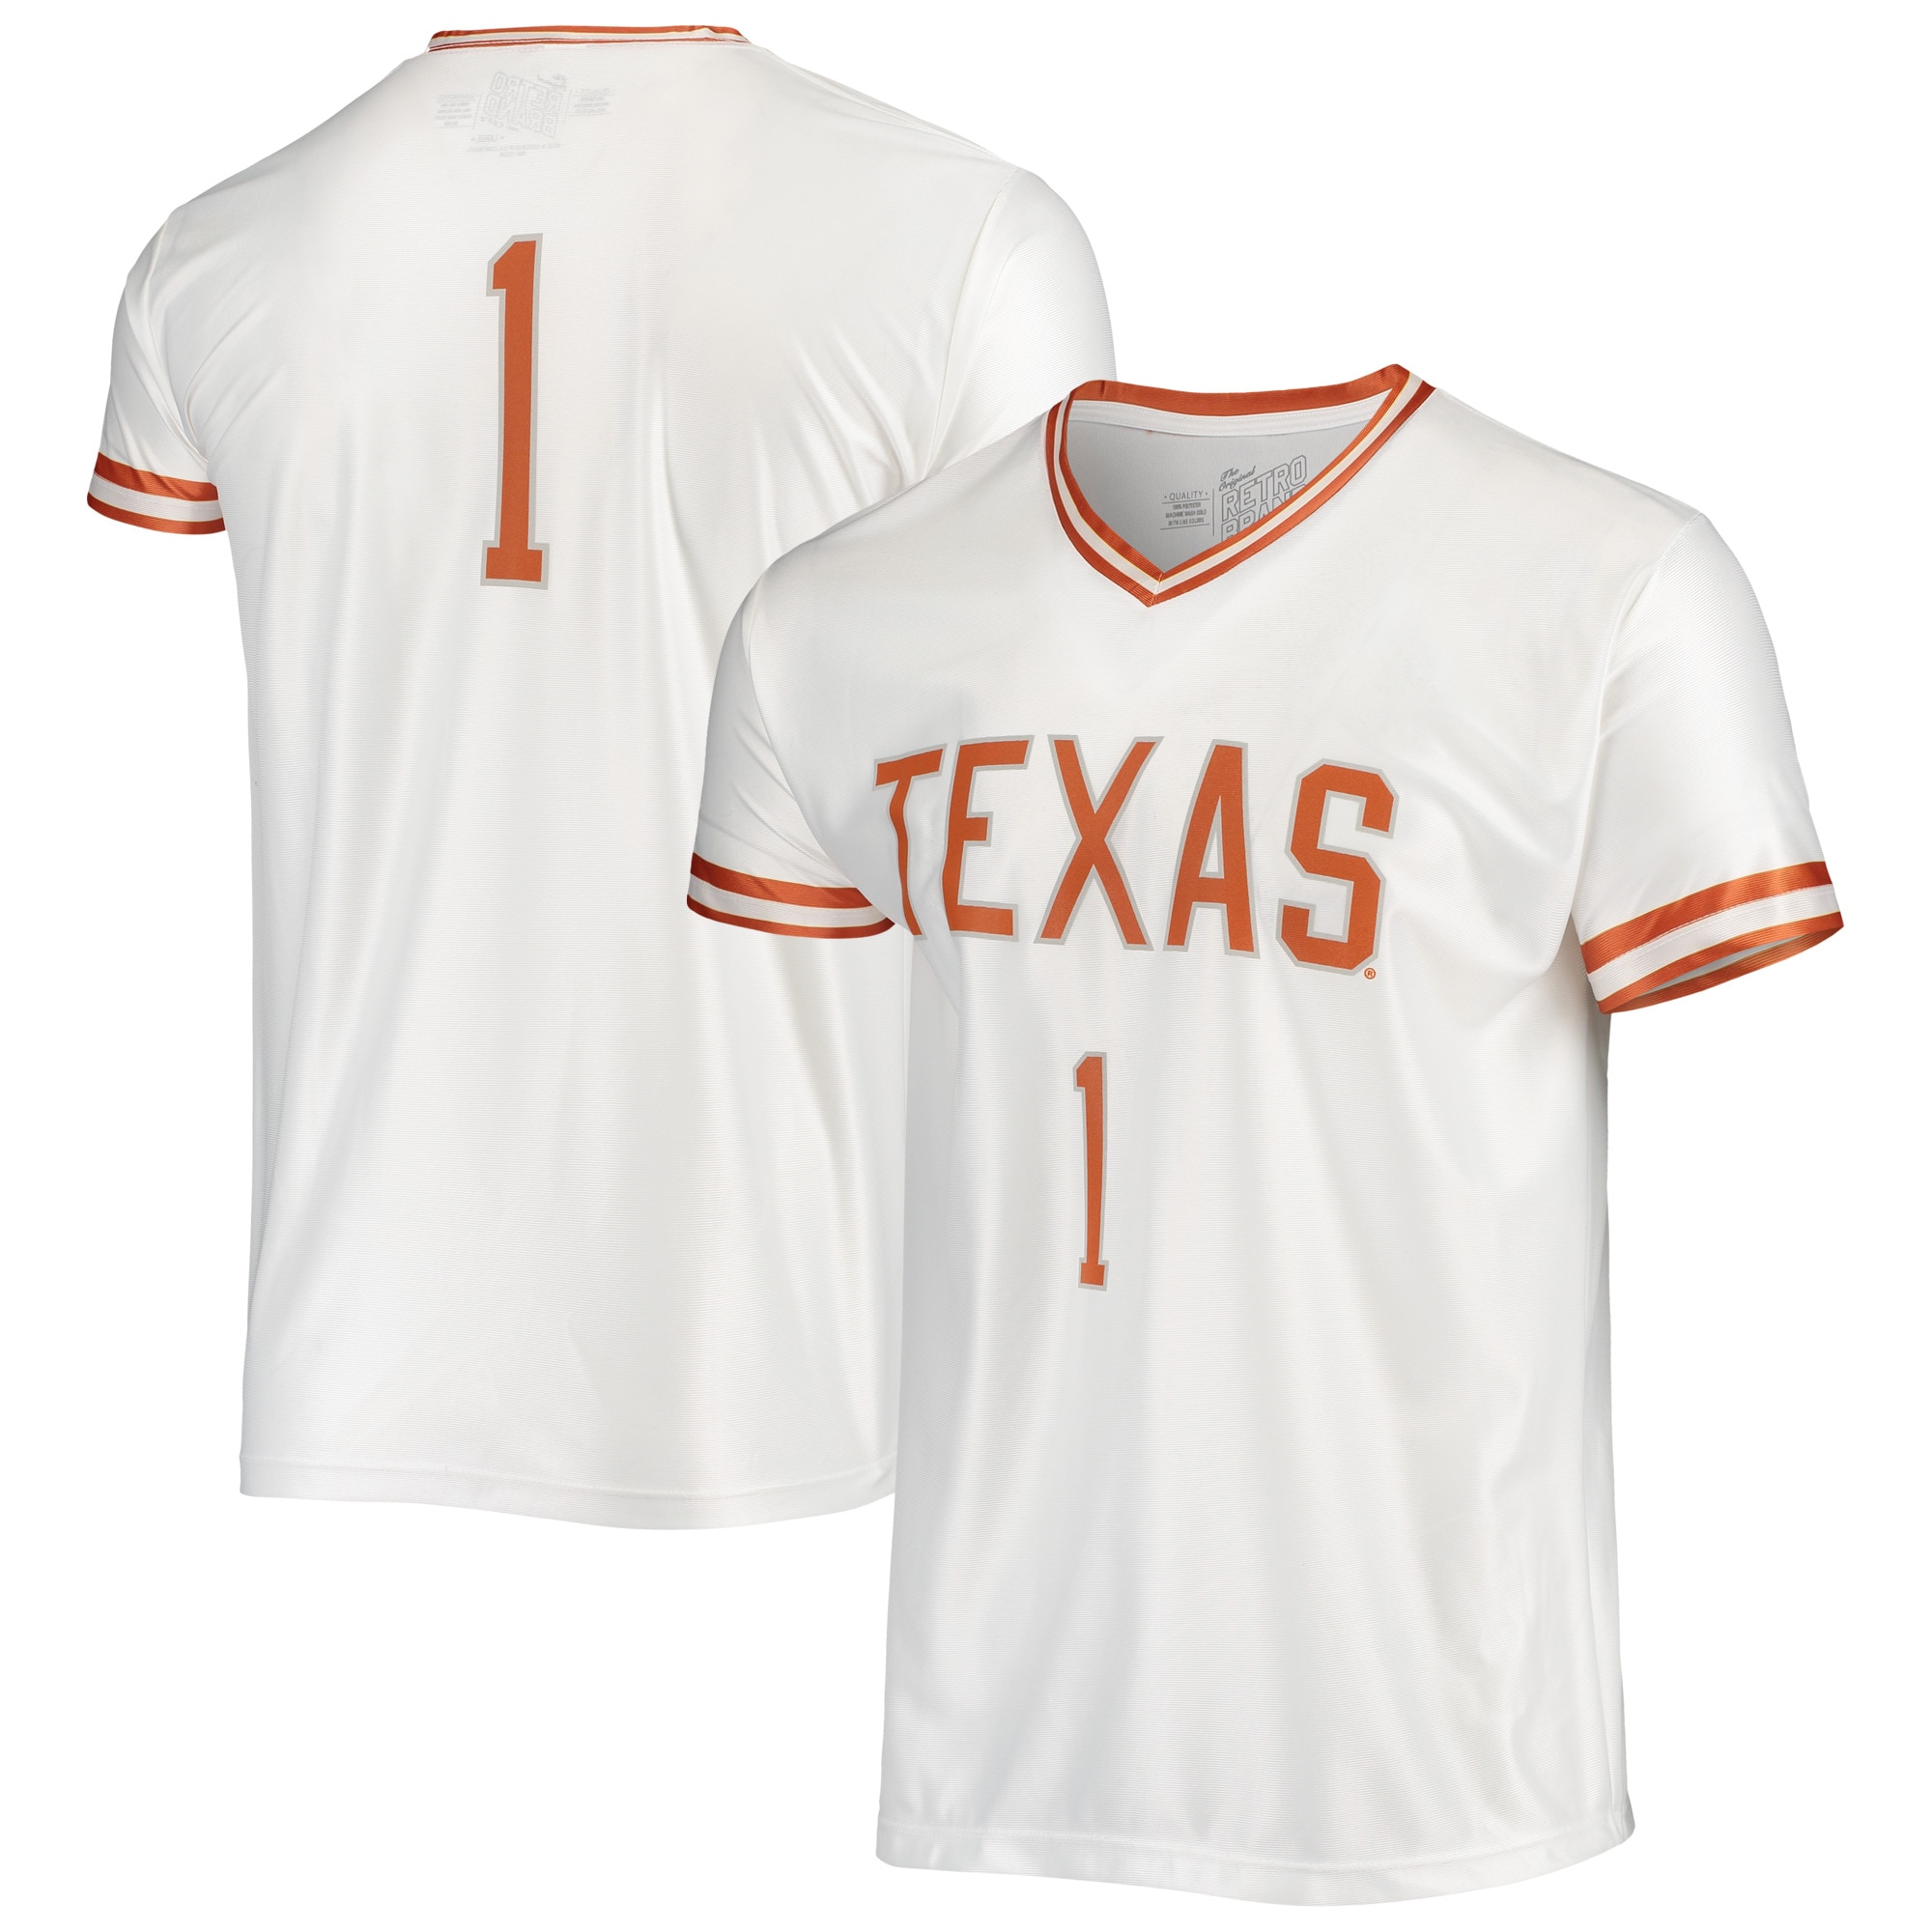 Texas Longhorns Original Retro Brand Basketball Jersey - White For Youth Women Men